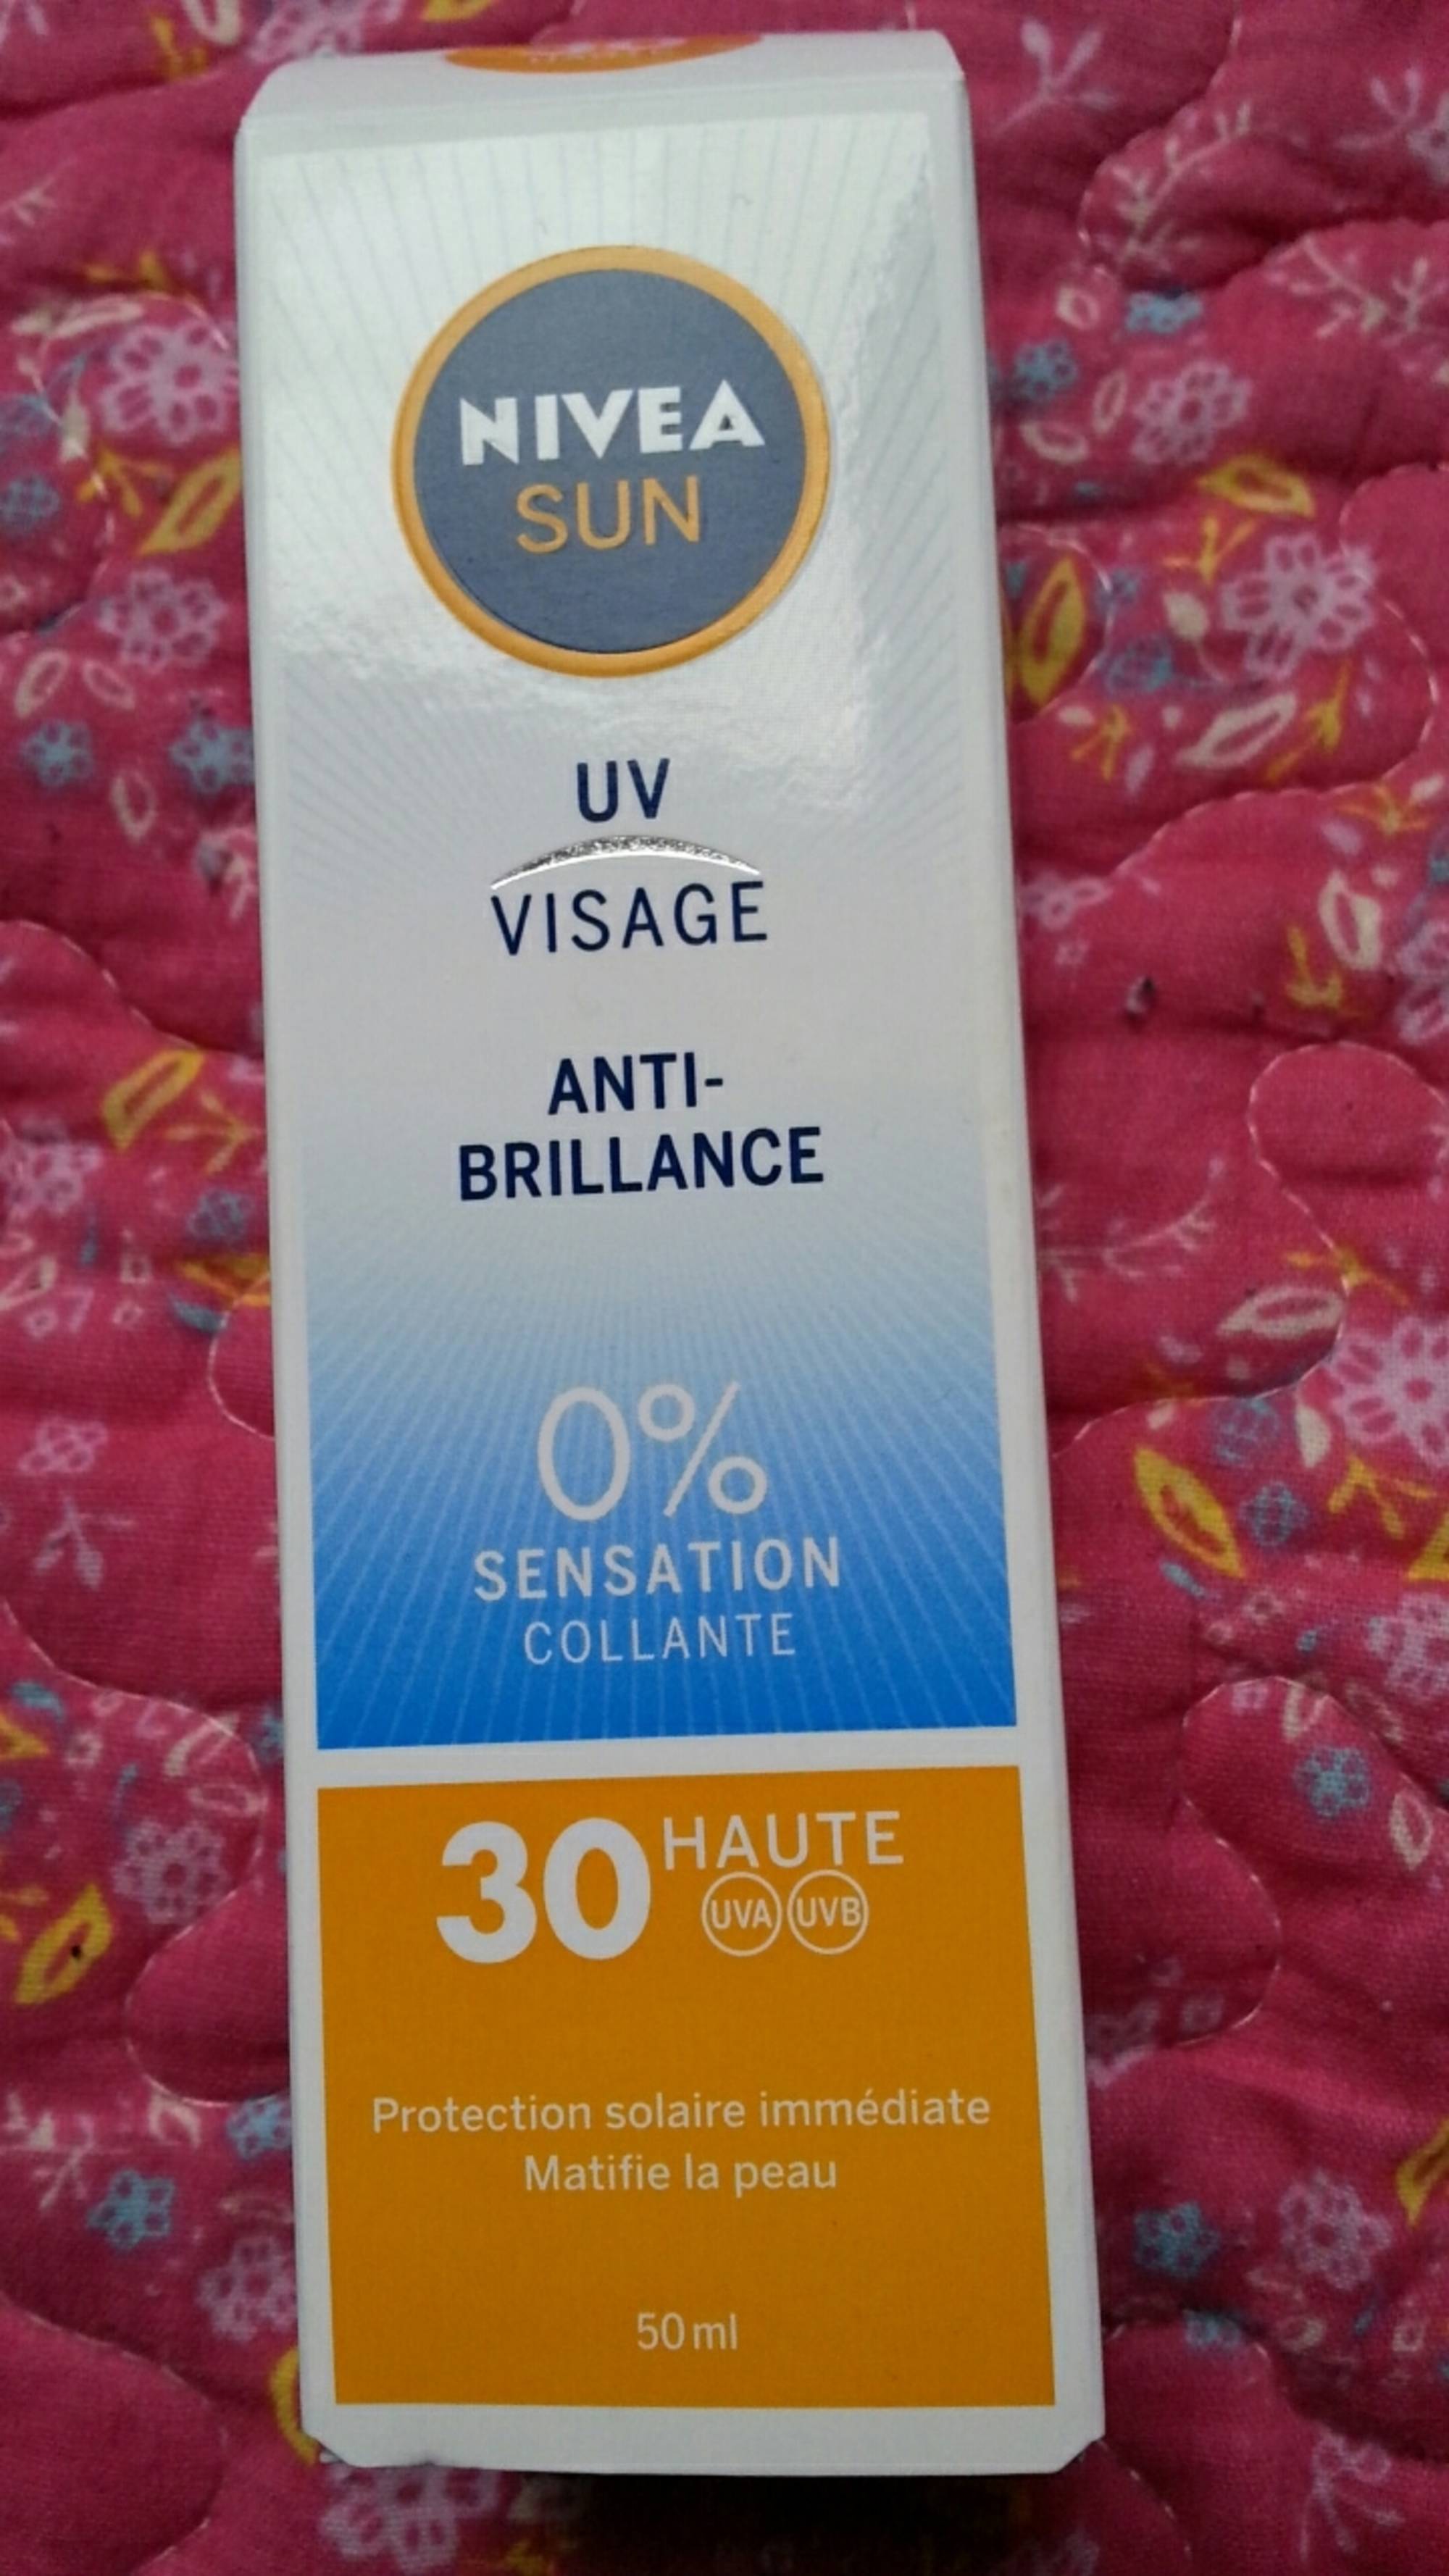 NIVEA - Sun - UV visage Anti-brillance 30 haute